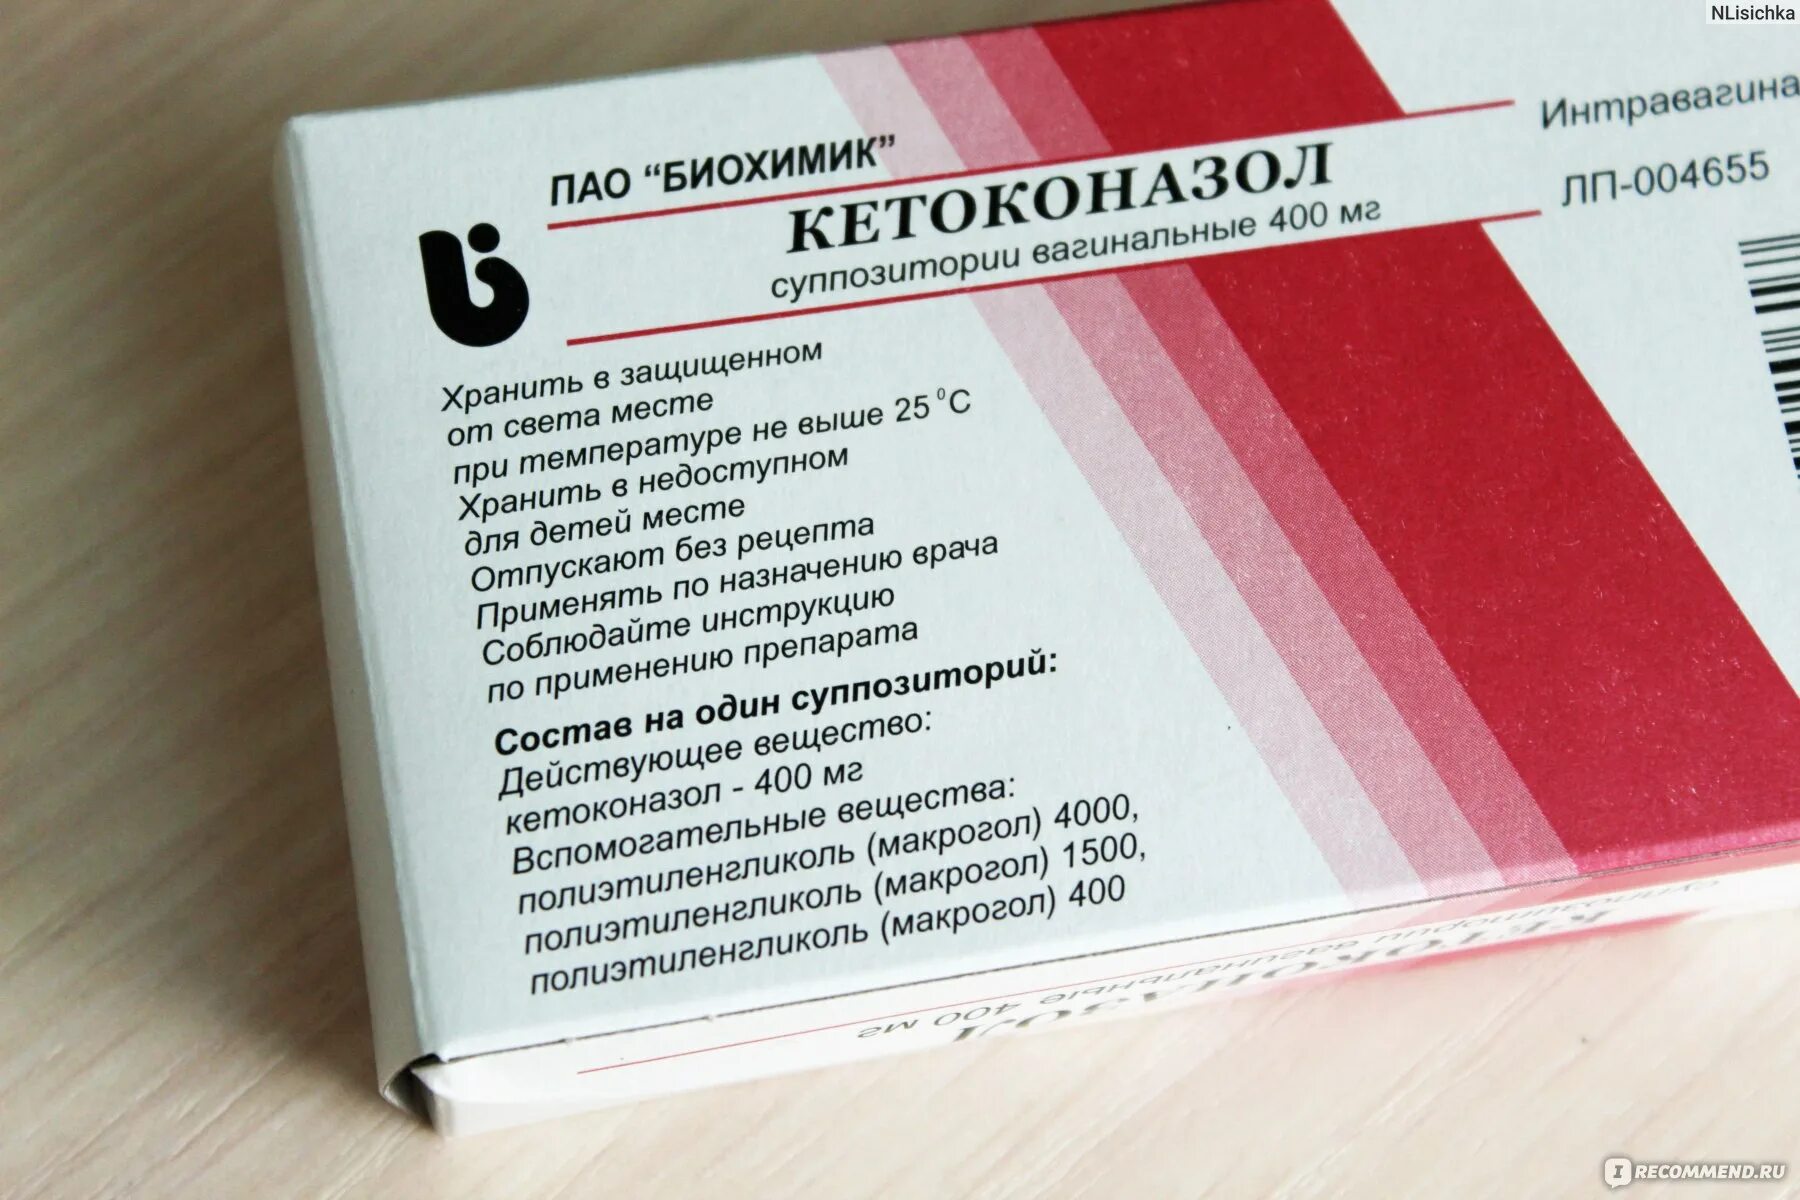 Просталамин таблетки цена отзывы аналоги. Кетоконазол суппозитории. Препарат от молочницы Кетоконазол. Суппозитории кетоконазола. Кетоконазол свечи препараты.